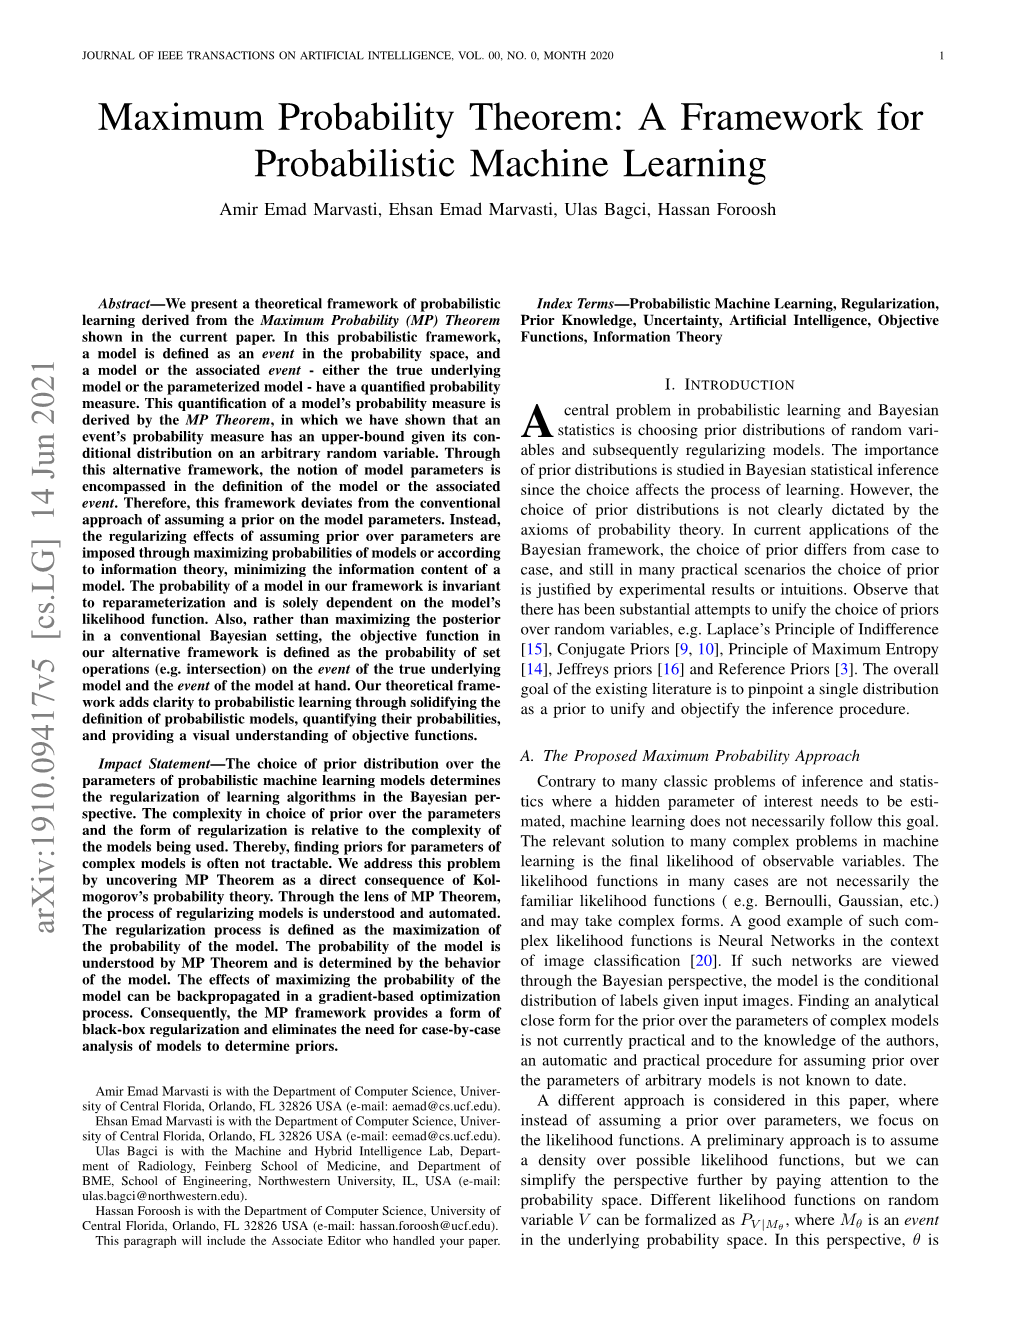 A Framework for Probabilistic Machine Learning Amir Emad Marvasti, Ehsan Emad Marvasti, Ulas Bagci, Hassan Foroosh